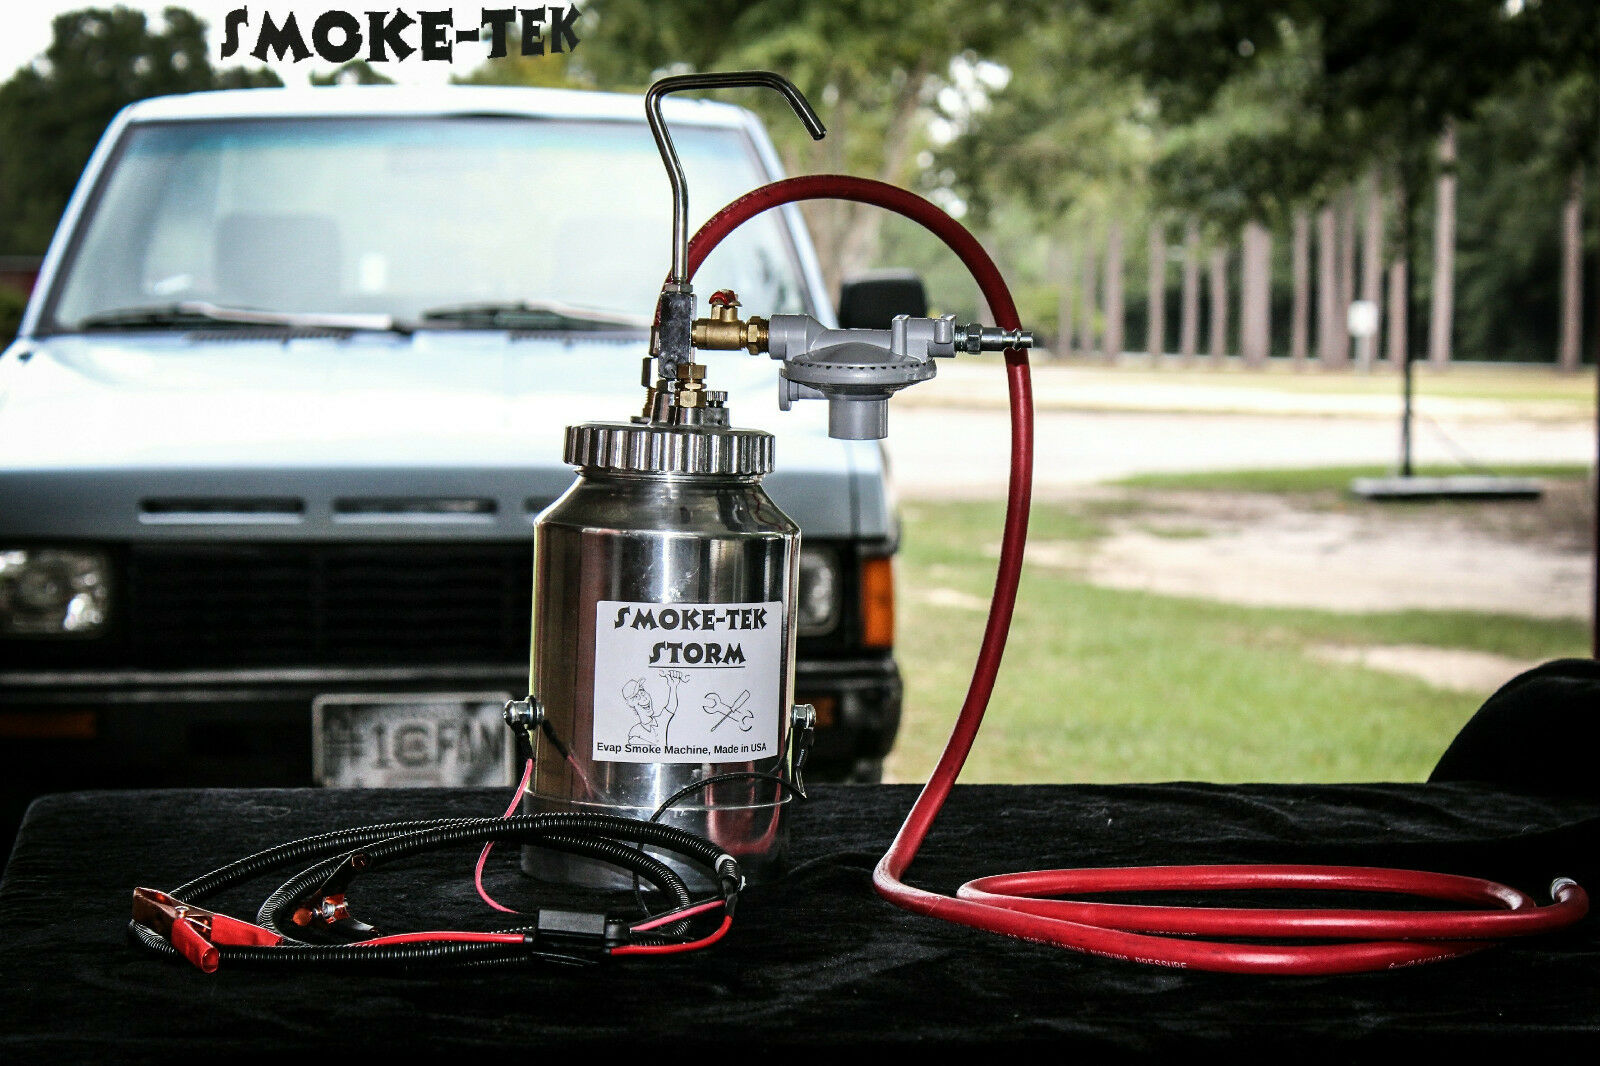 Smoke-tek Evap Smoke Machine Diagnostic Emissions Vacuum Leak Detectortester New